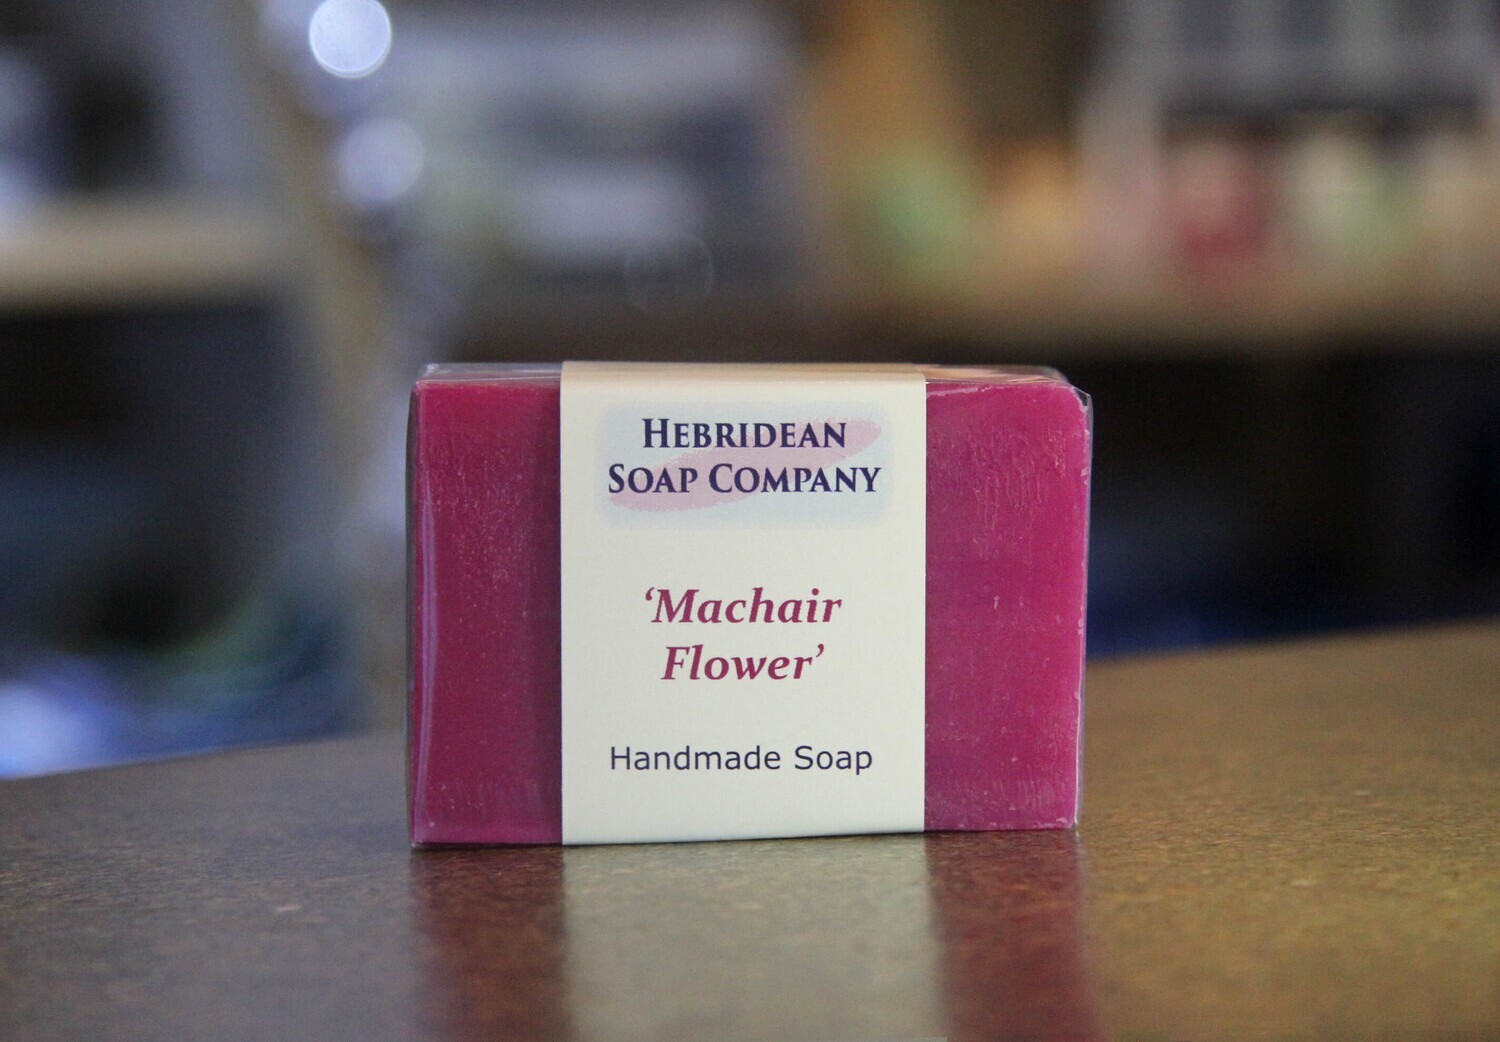 Machair flower soap